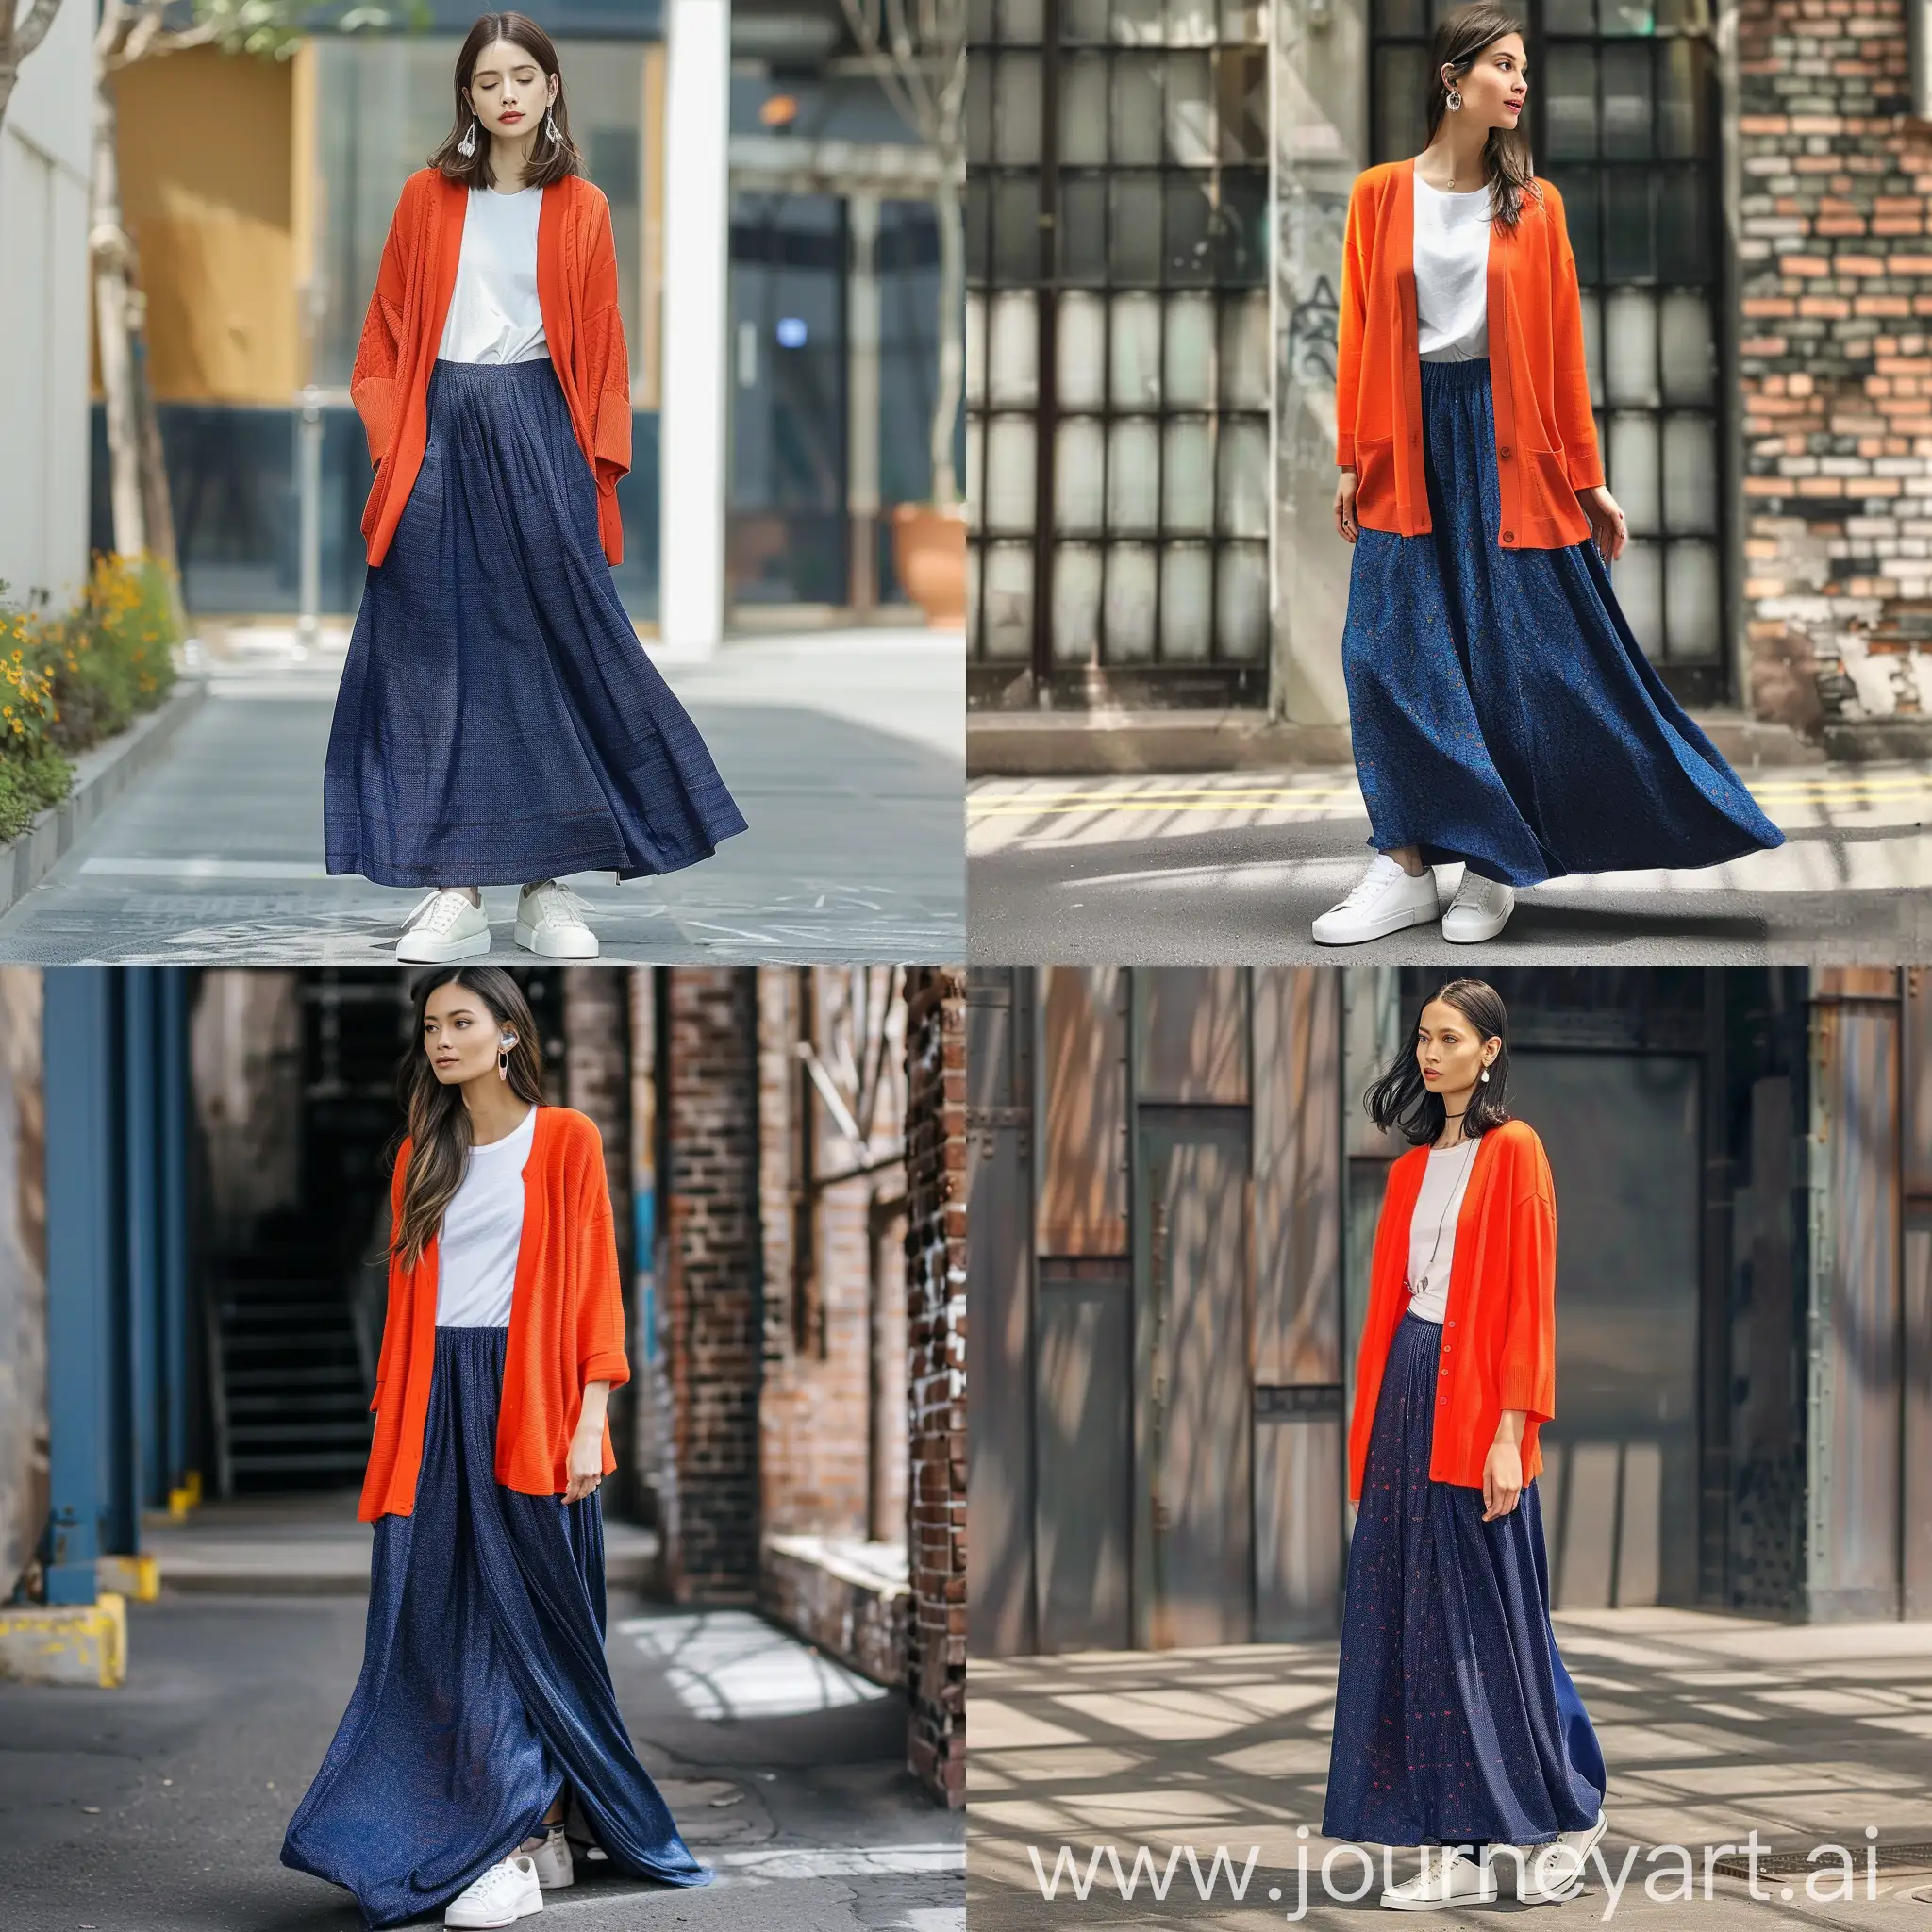 Urban-Chic-Orange-Cardigan-with-Dark-Blue-Skirt-and-Minimalist-Accessories